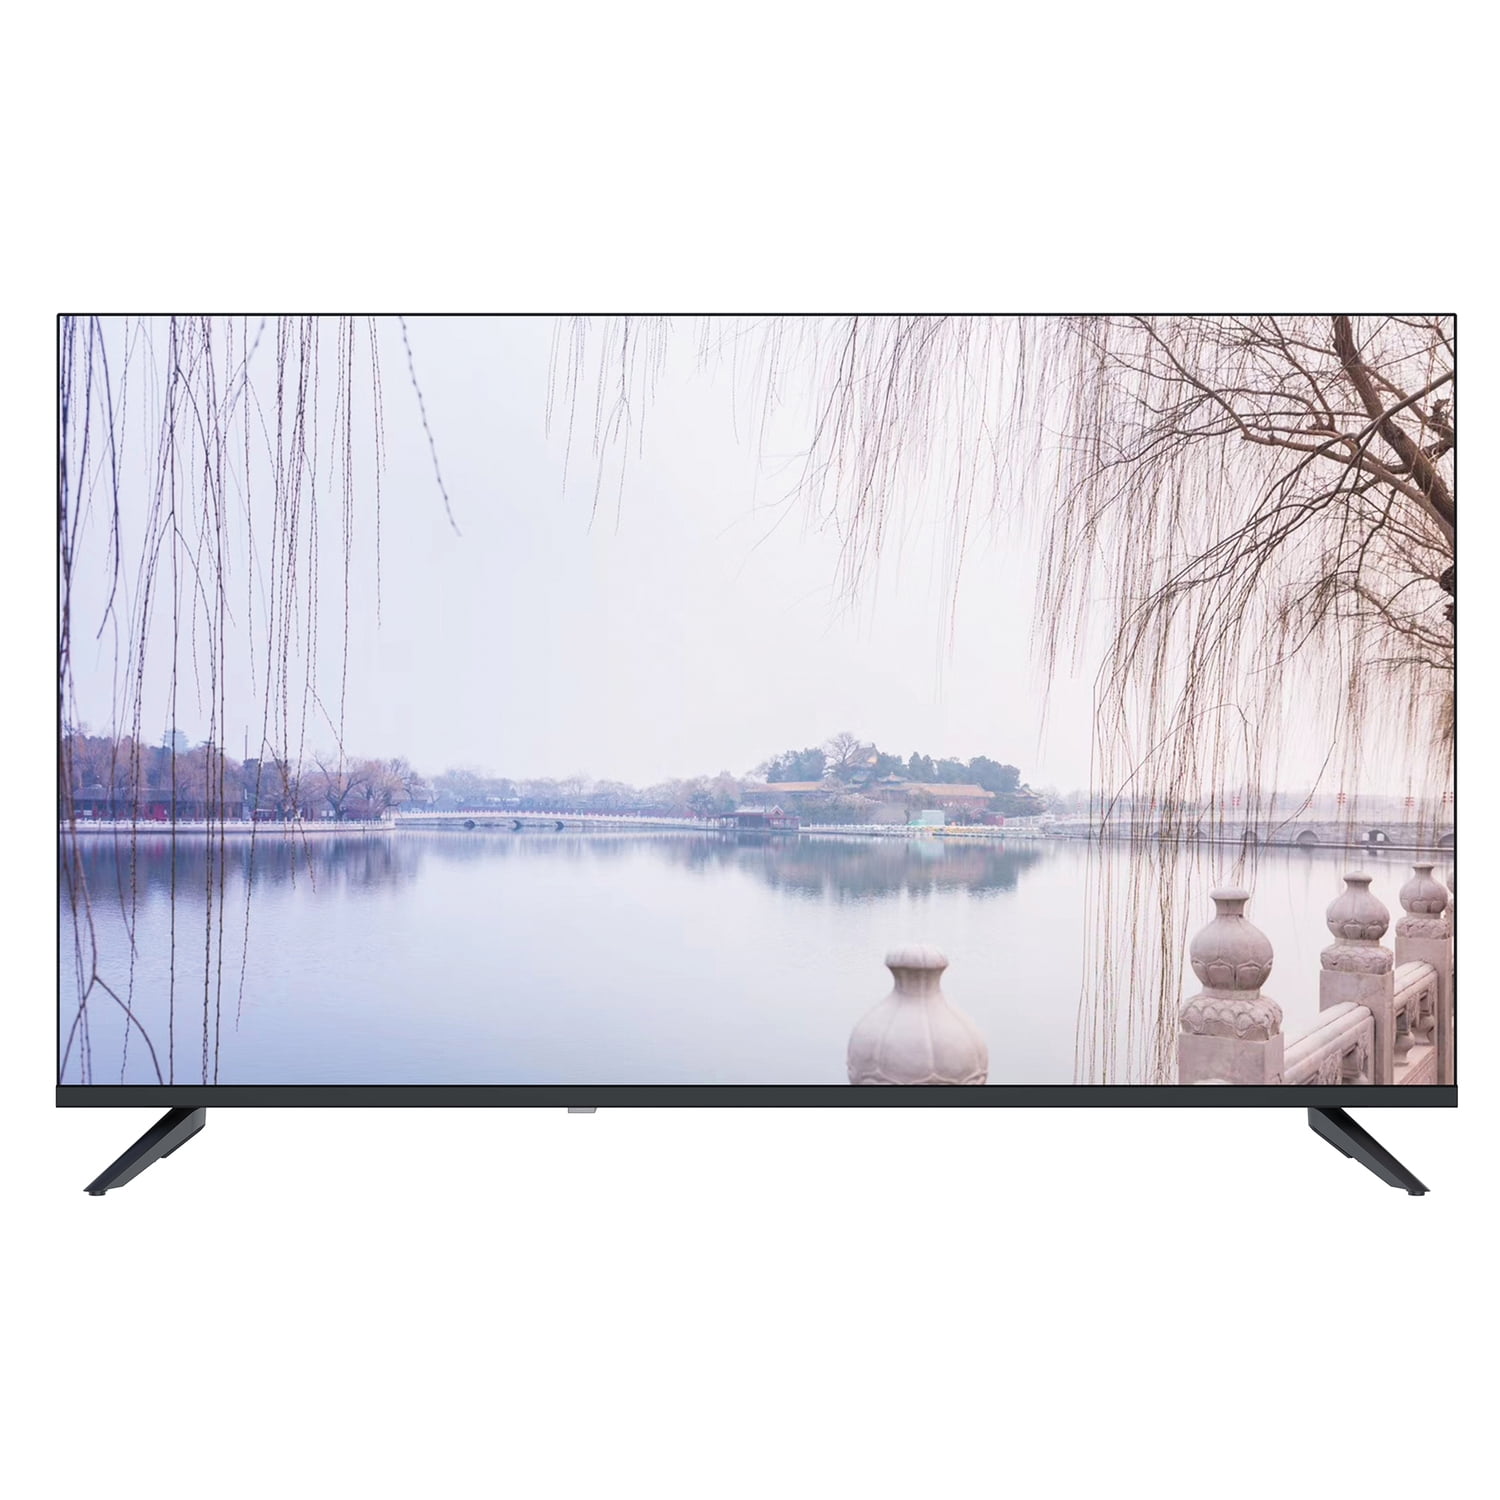 Tv 40 Pulgadas Sansui Full HD Smart Tv SMX-40V1FA Android Tv LED